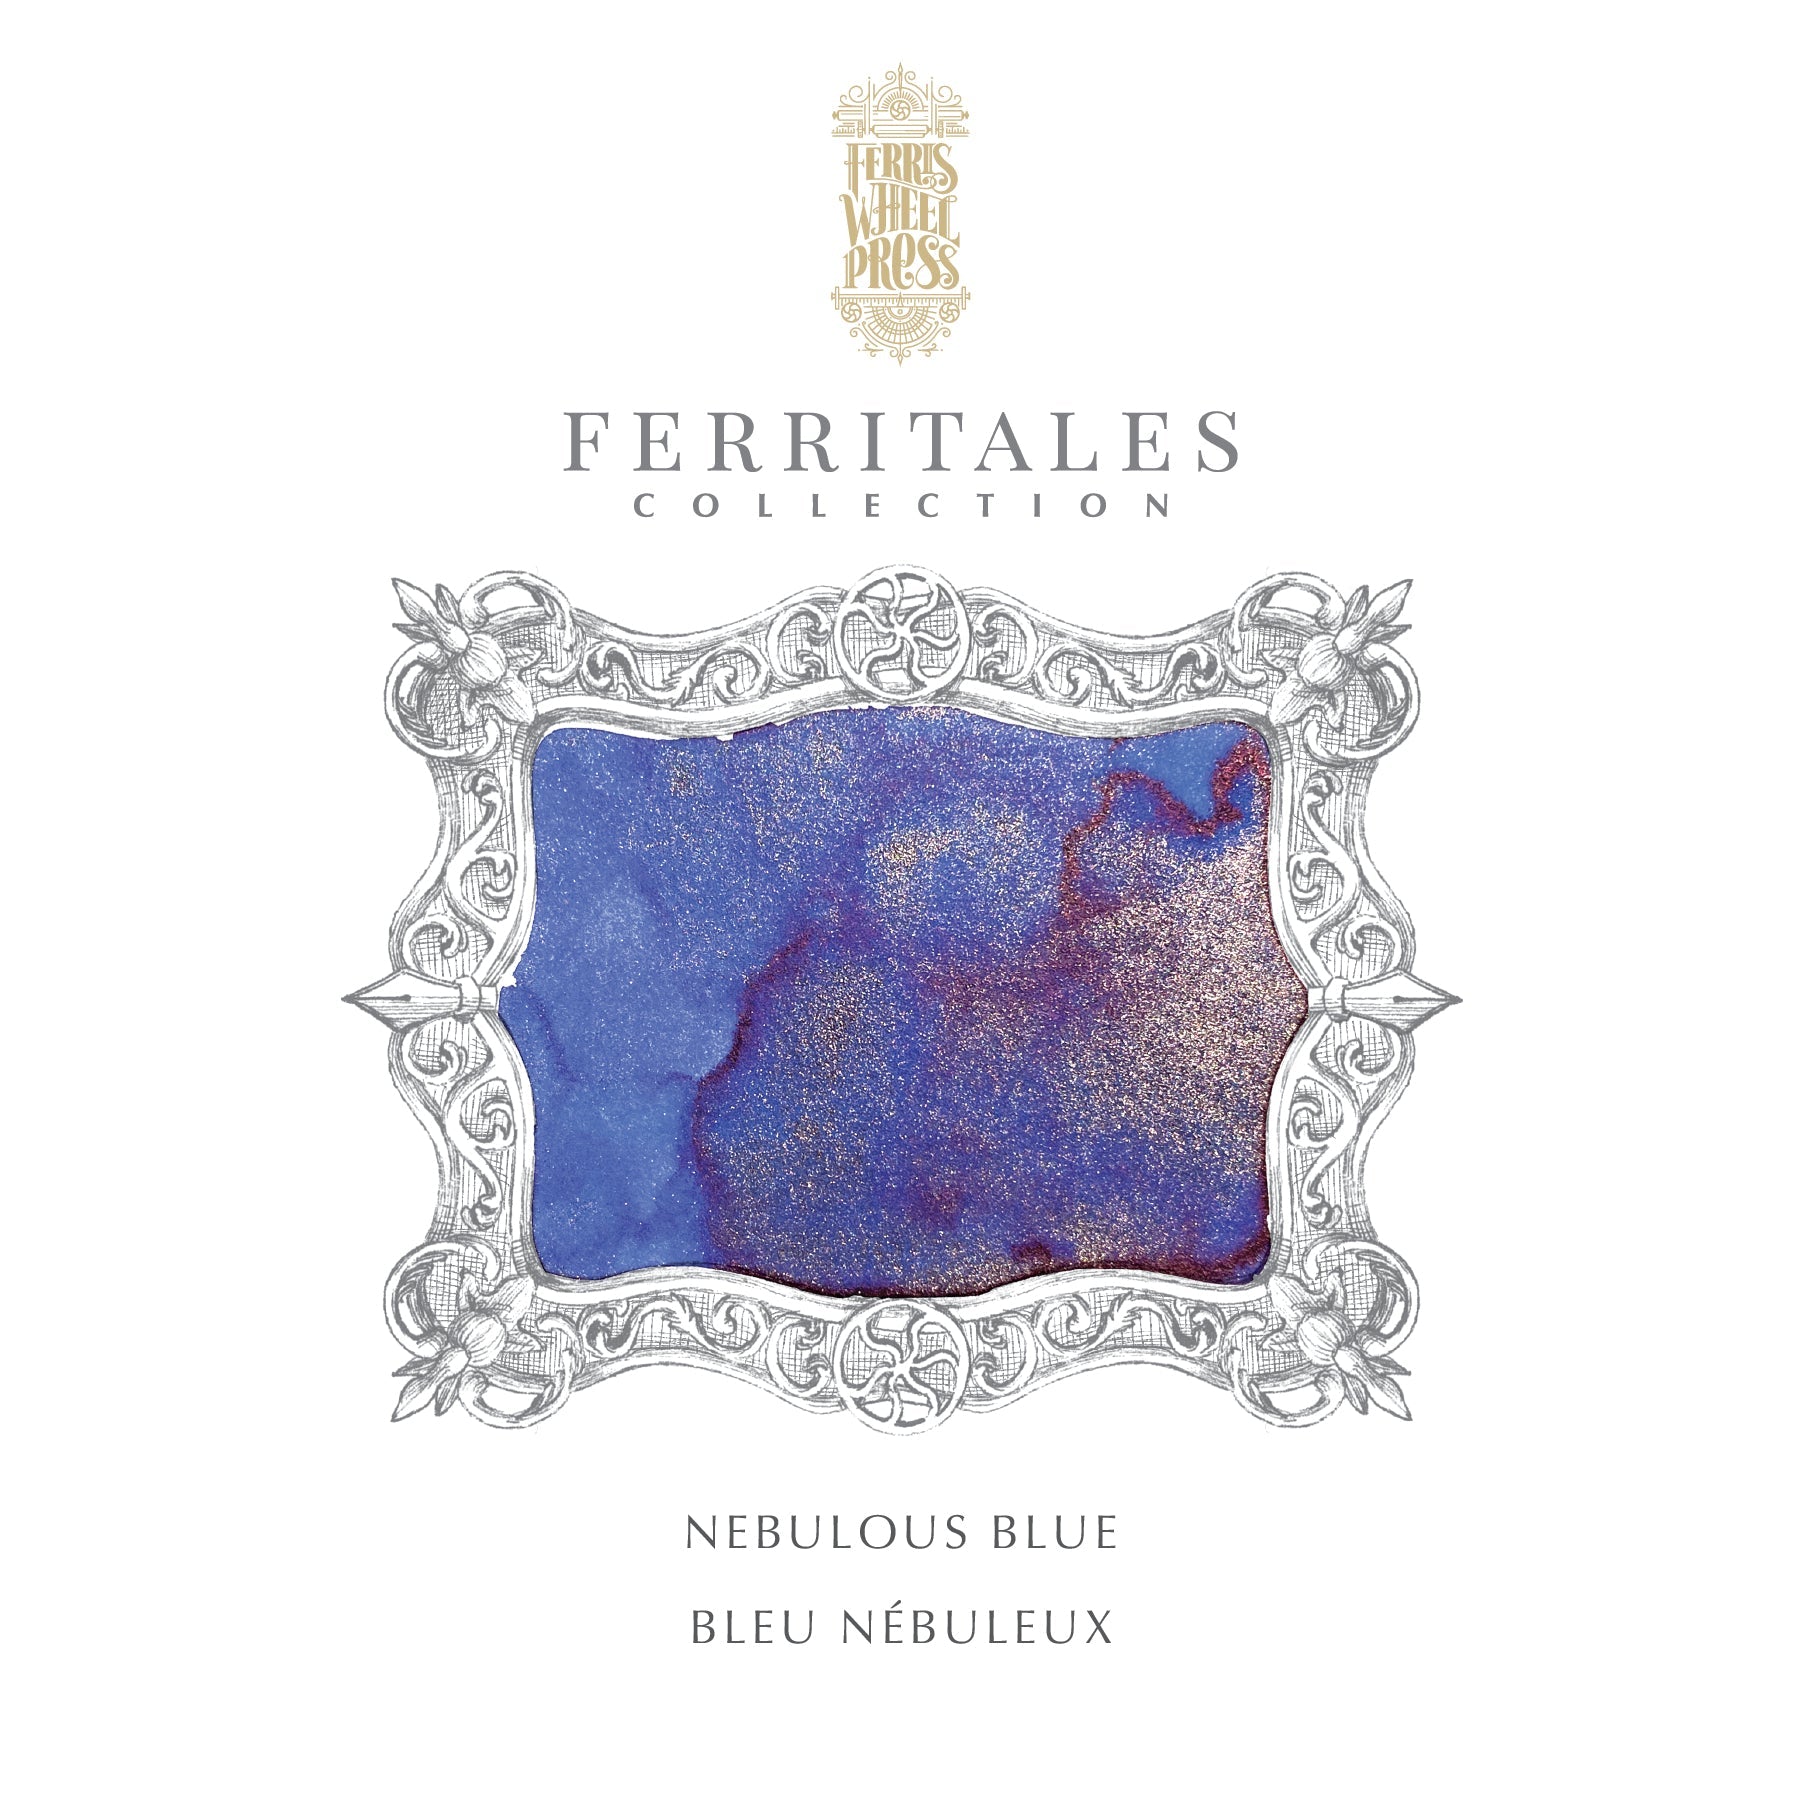 Curious Collaboration FerriTales - Ferris Wheel Press x Esterbrook Collection | Nebulous Blue & Nebulous Plume